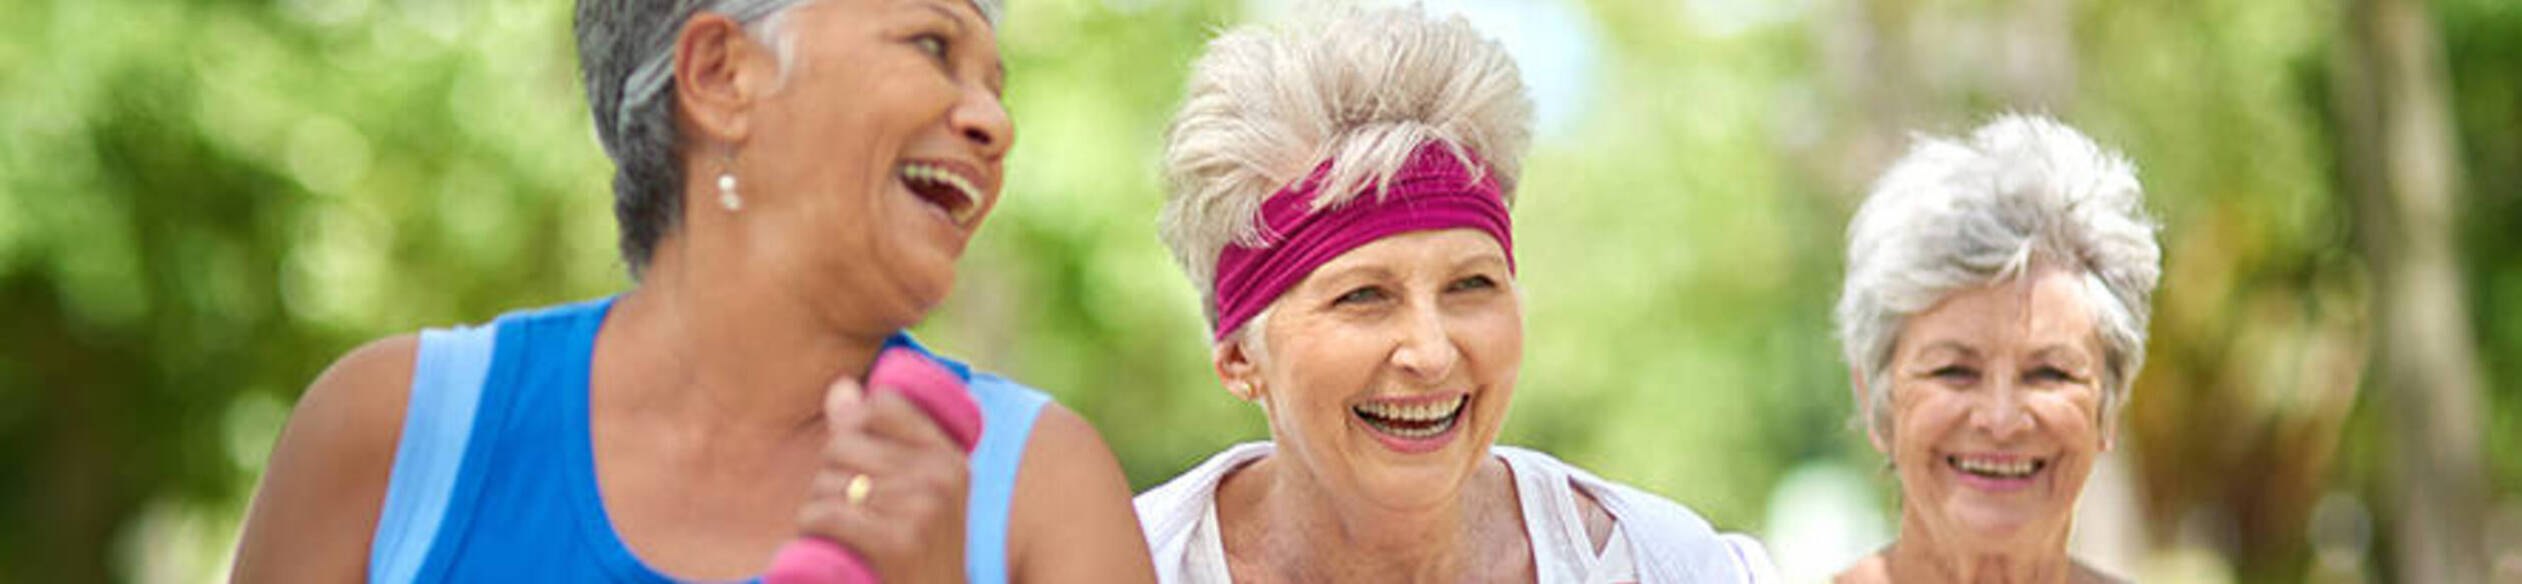 Three women exercising longevity wellness